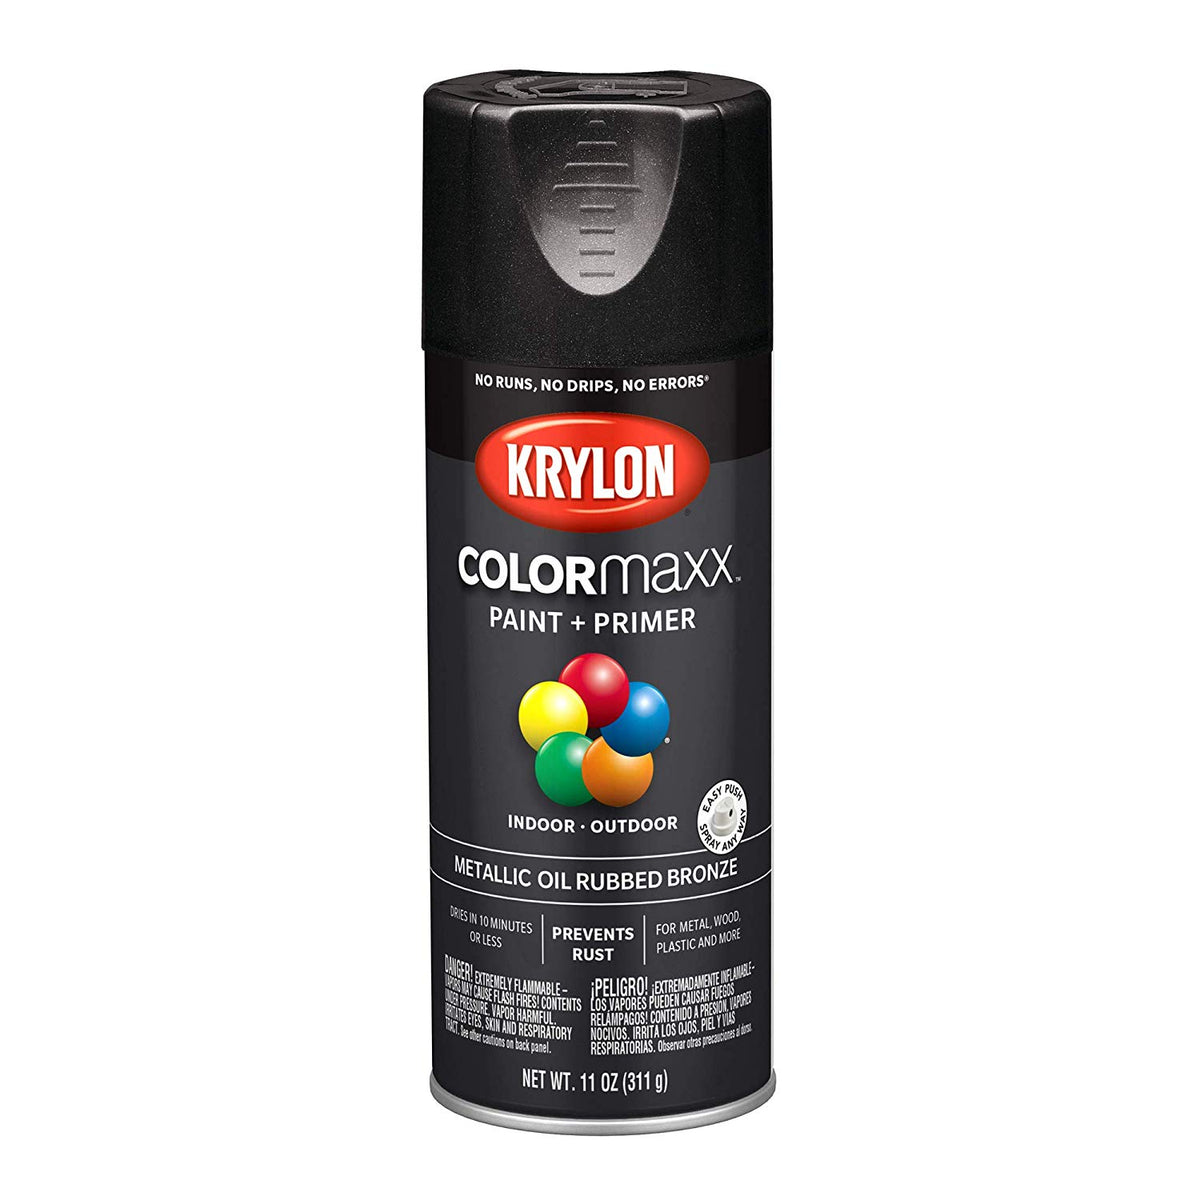 Krylon K05585007 COLORmaxx Paint+Primer Spray, Metallic Oil Rubbed Bronze, 12 Oz